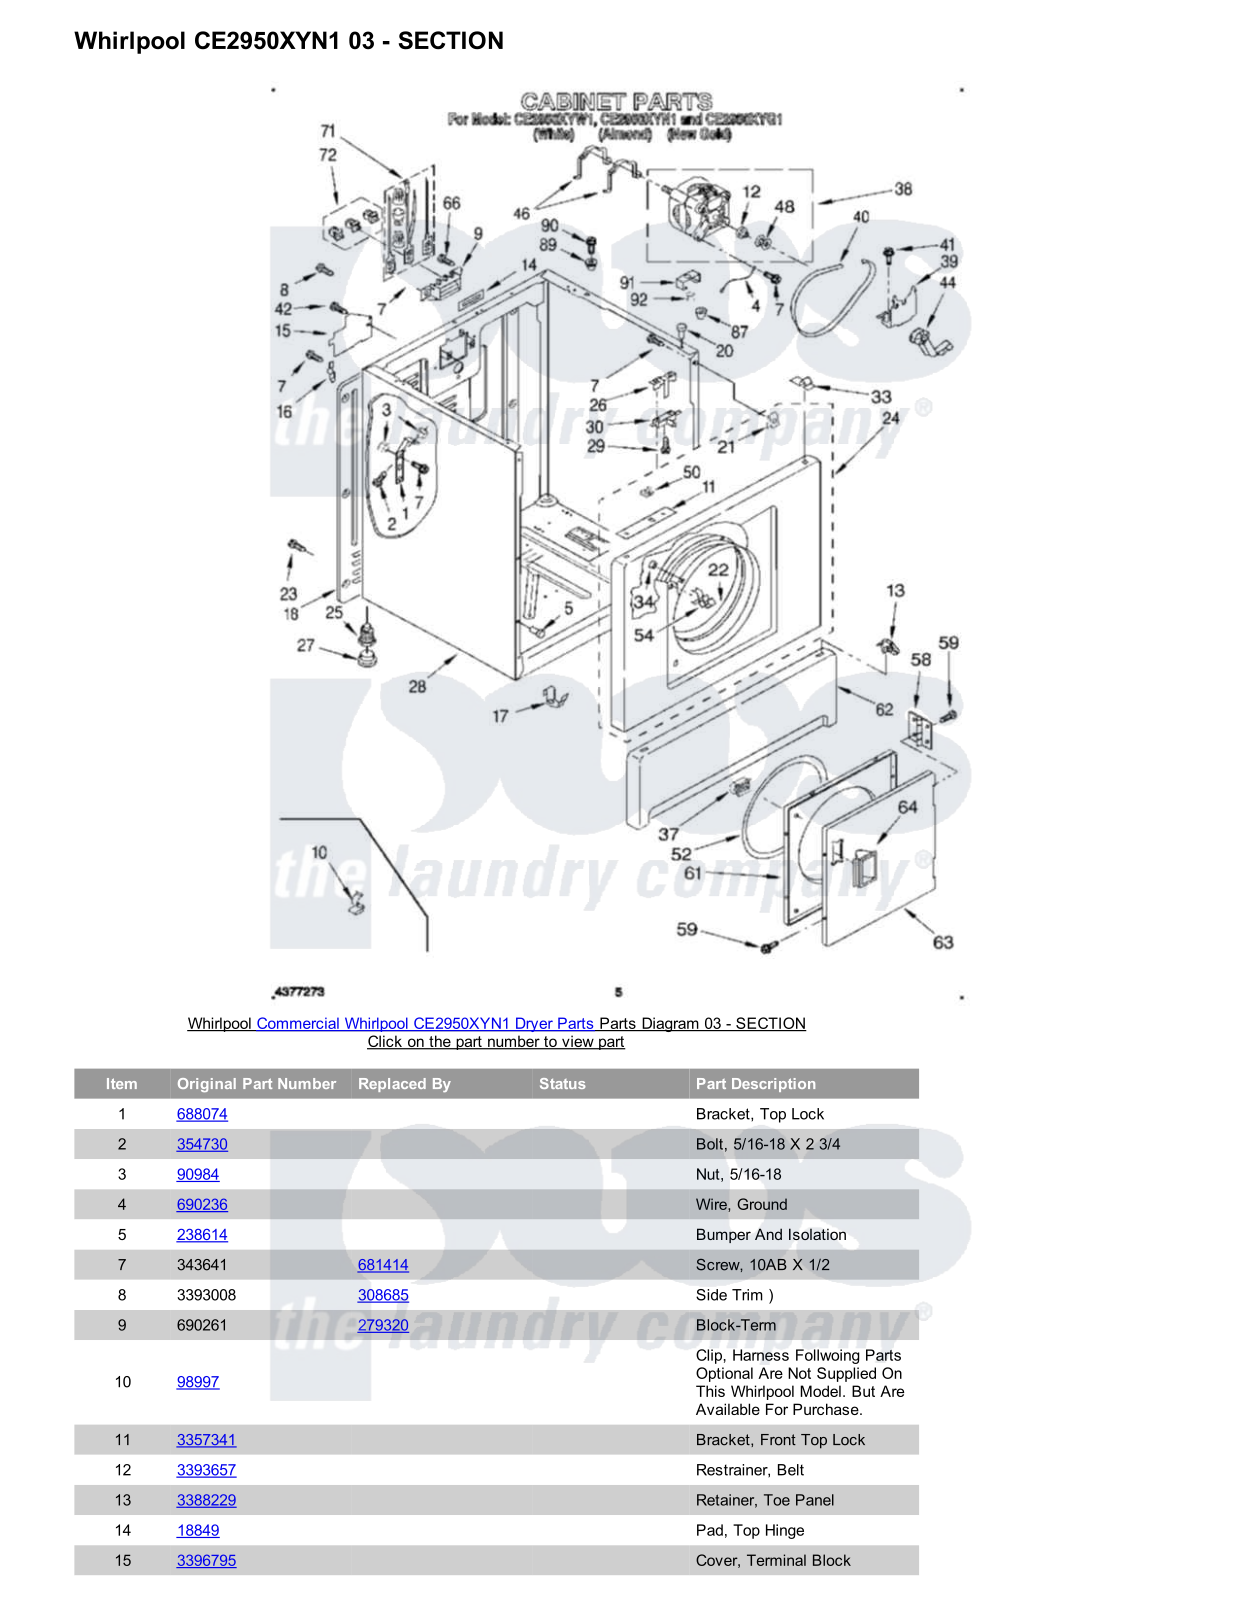 Whirlpool CE2950XYN1 Parts Diagram